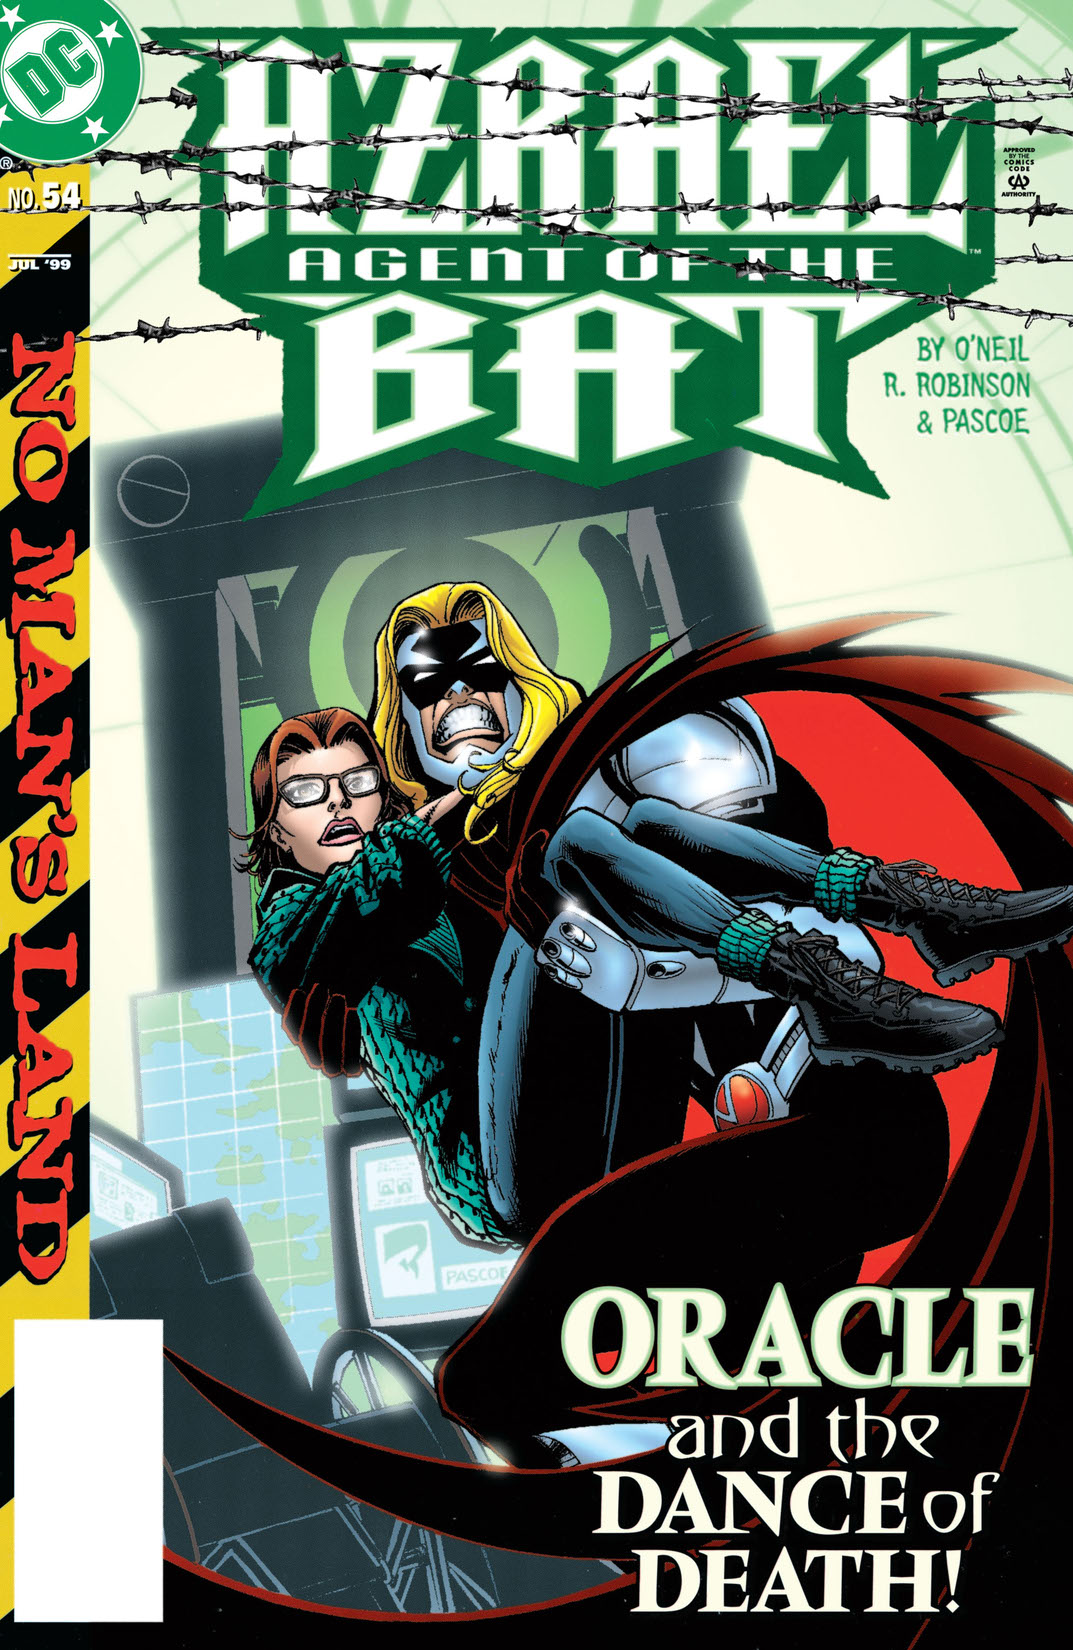 Azrael: Agent of the Bat #54 preview images